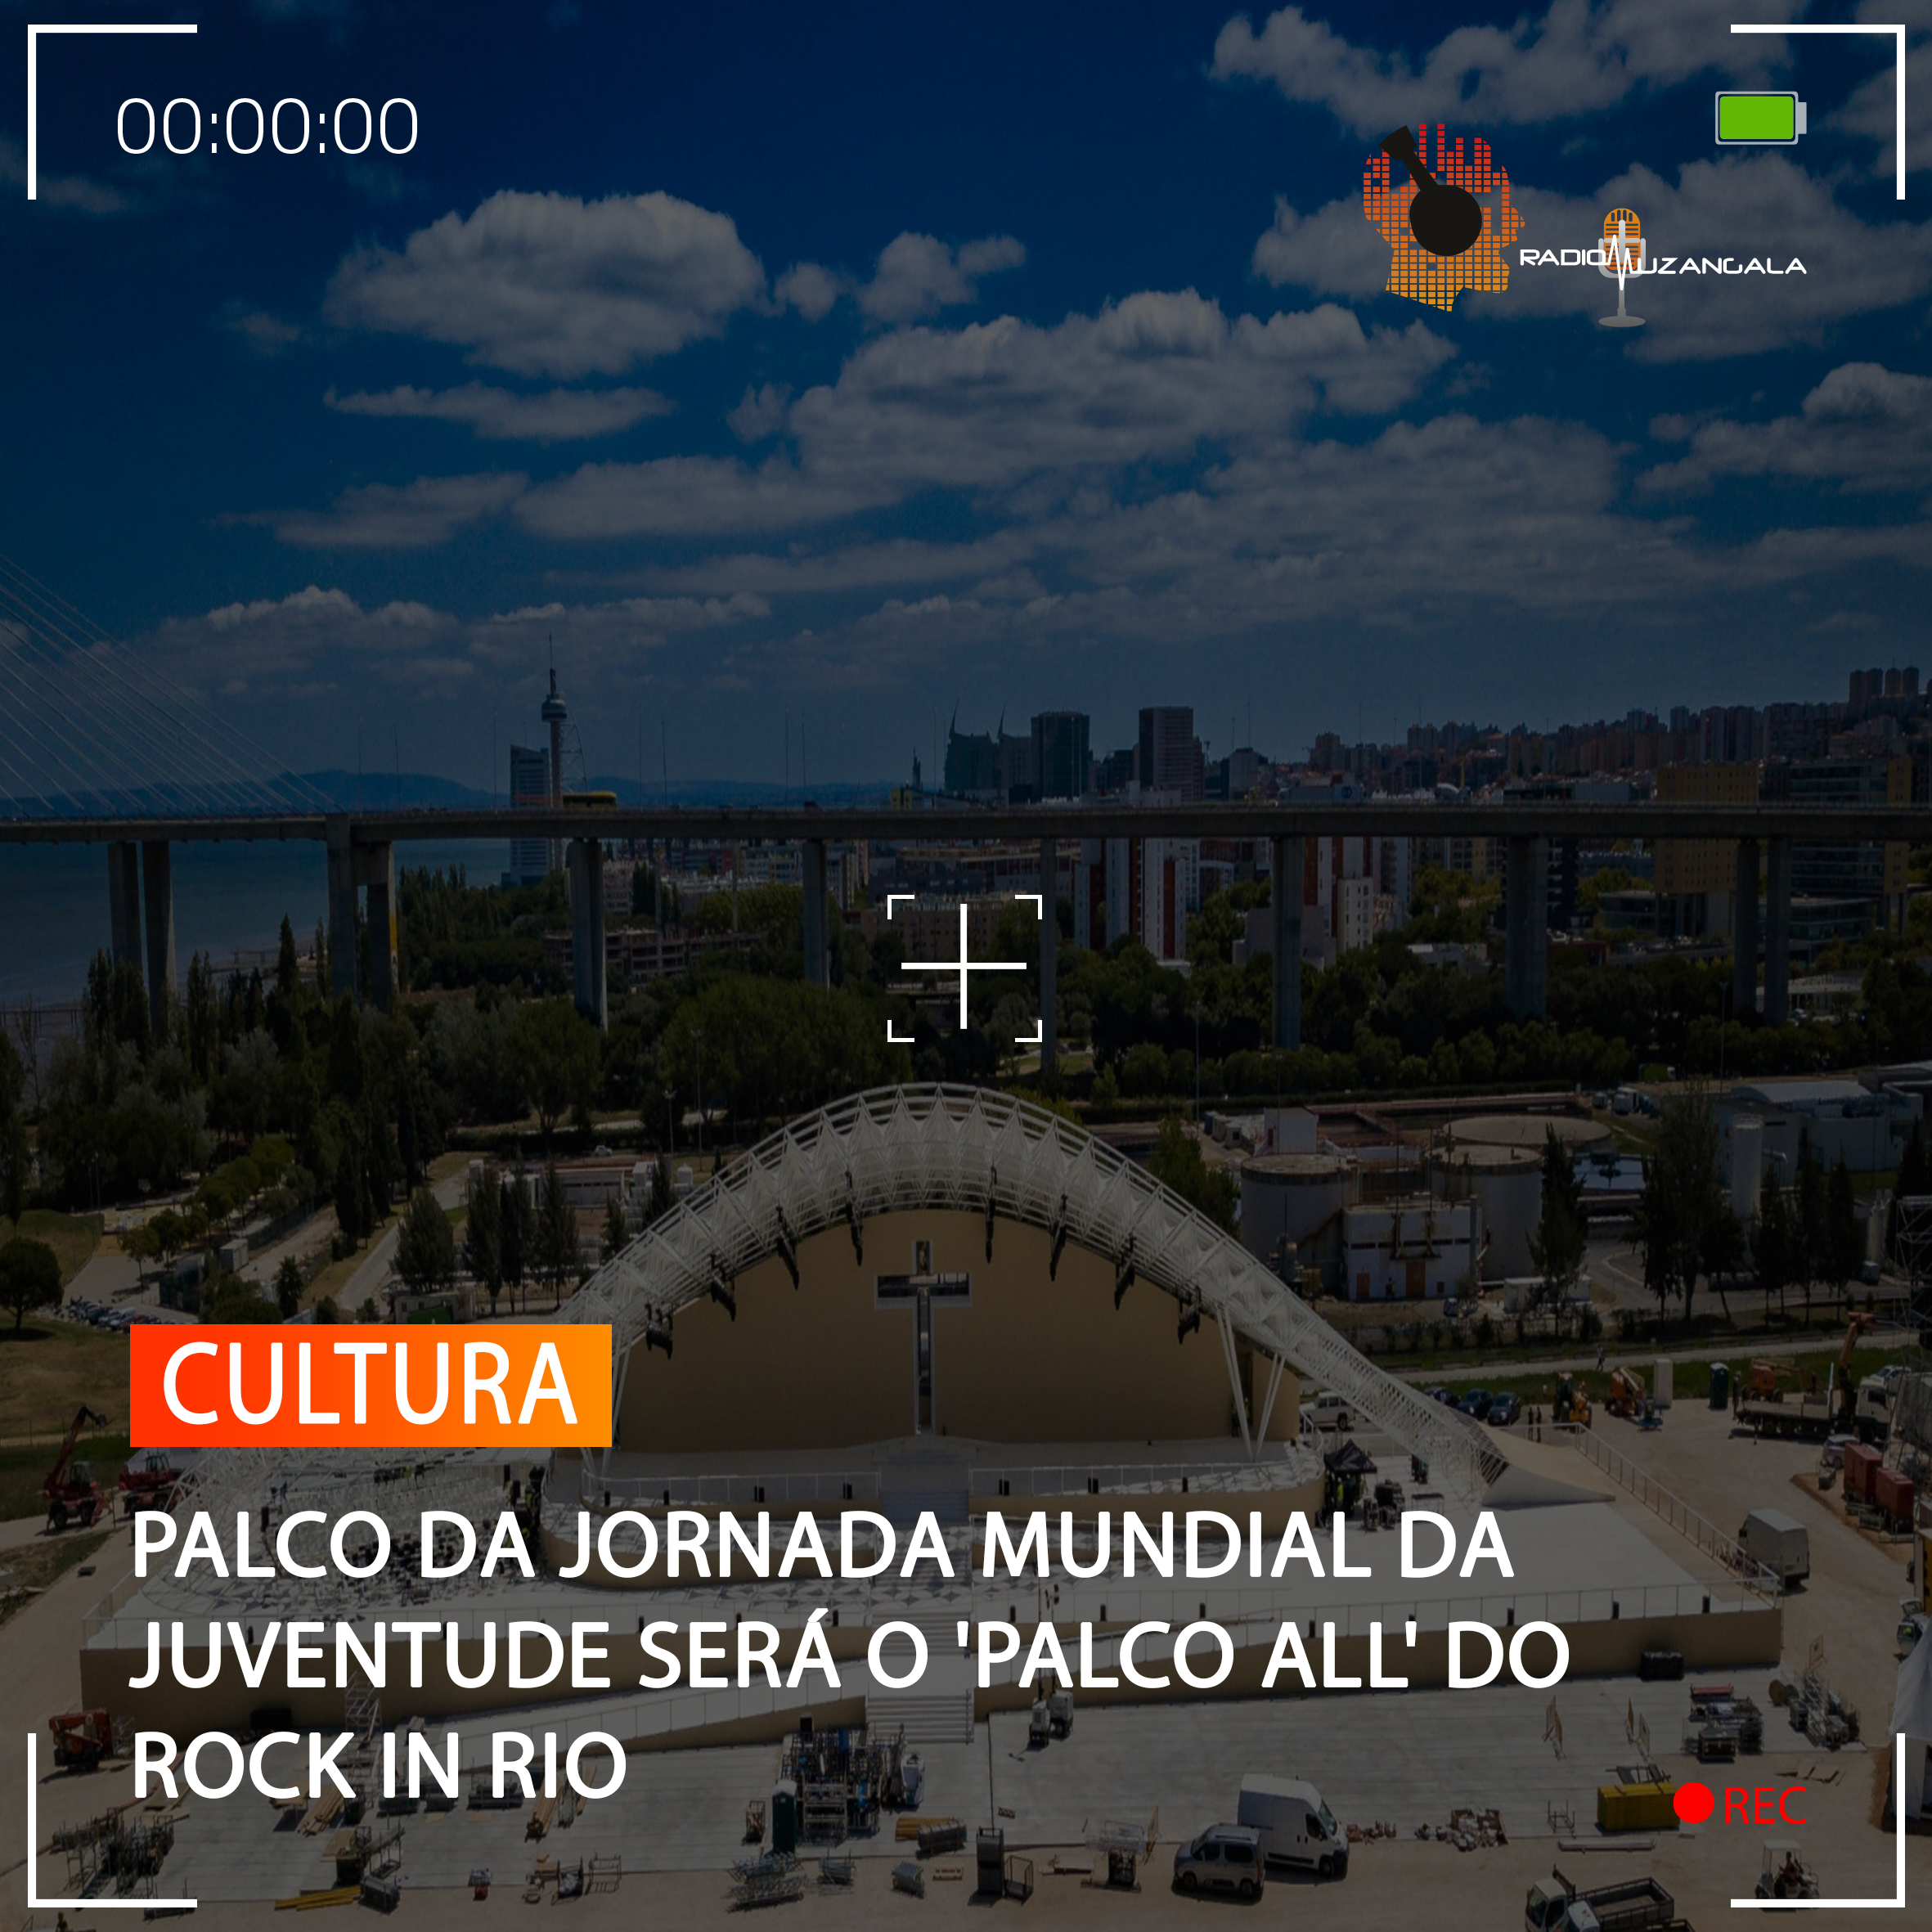  PALCO DA JORNADA MUNDIAL DA JUVENTUDE SERÁ O ‘PALCO ALL’ DO ROCK IN RIO